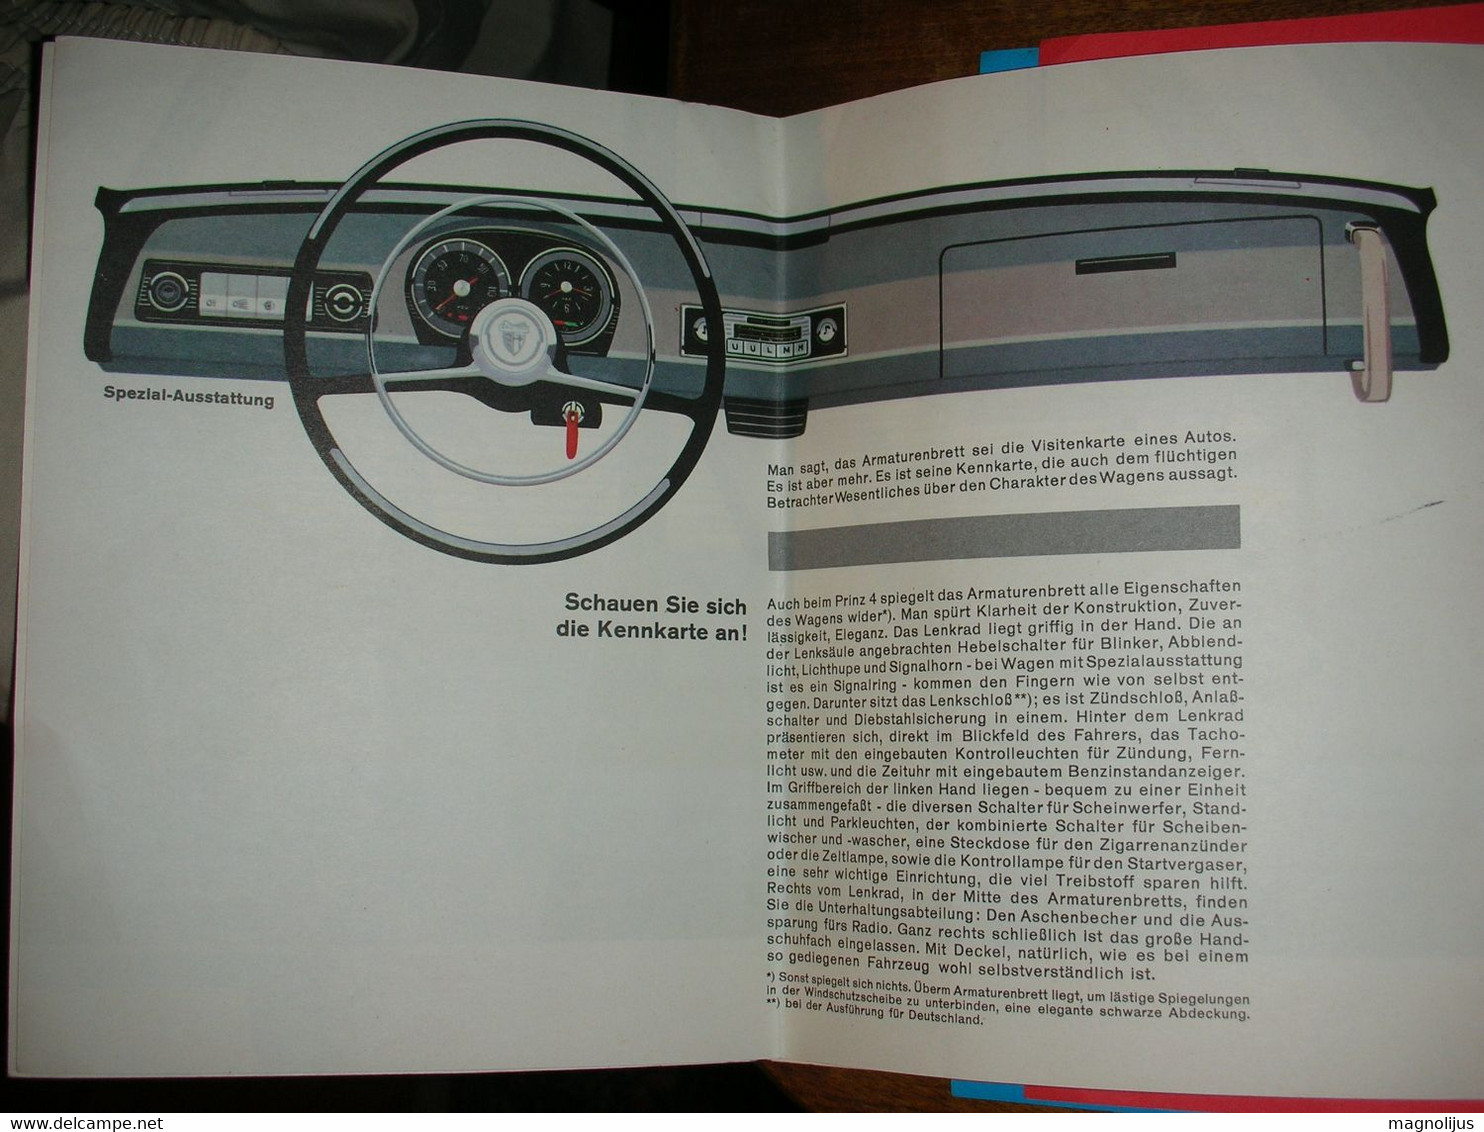 NSU-Prinz 4,automobile brochure,catalog,car instruction,Benz shop drivers guide,dim.29.5x19.5 cm,old timer advertising